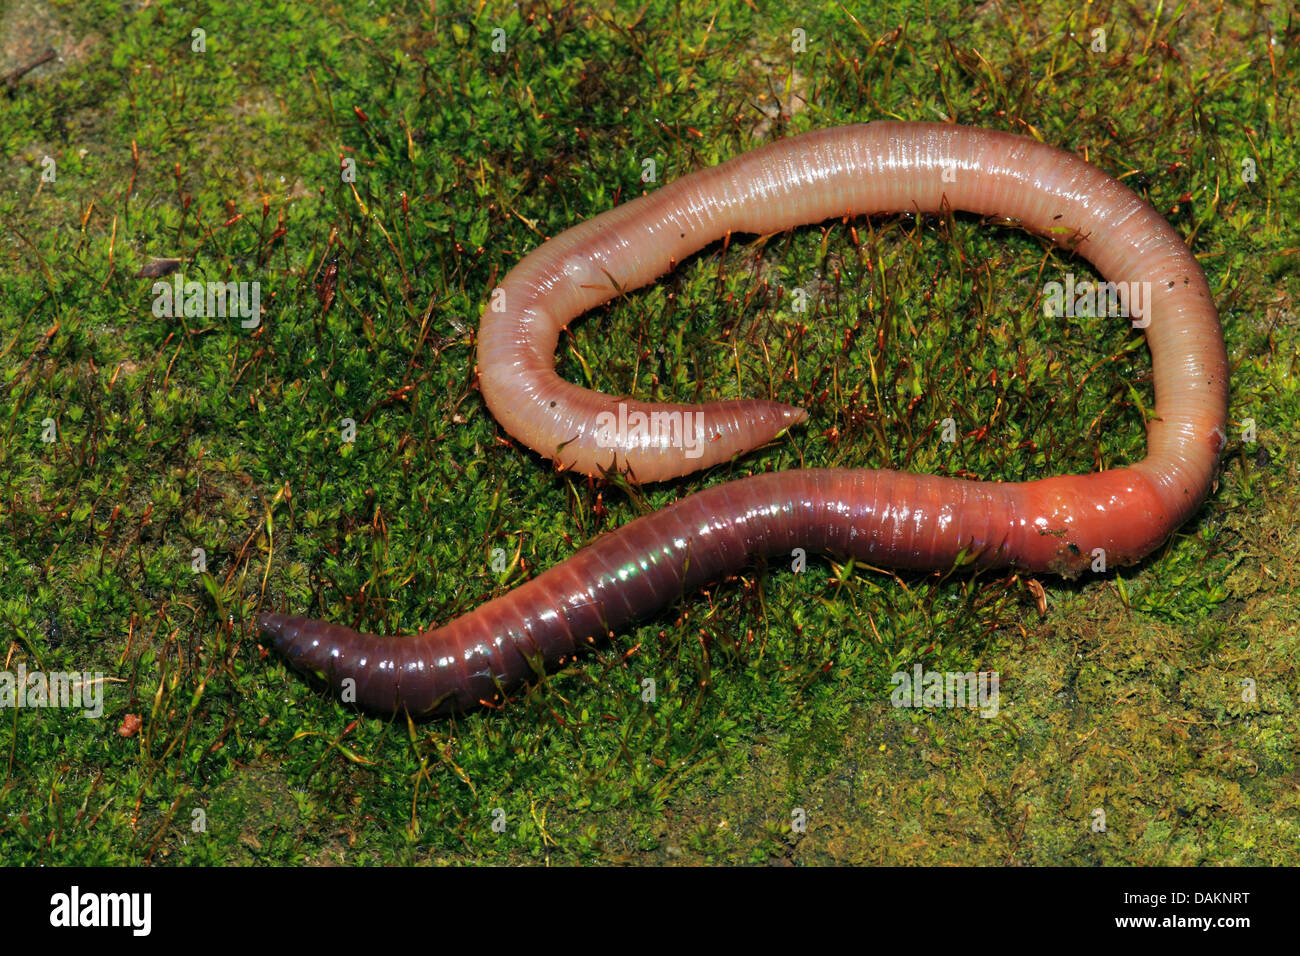 Ver de terre commun, ver de terre, ver de lob, rosée worm, Ver squirreltail twachel, (Lumbricus terrestris), sur sol moussu, Allemagne Banque D'Images